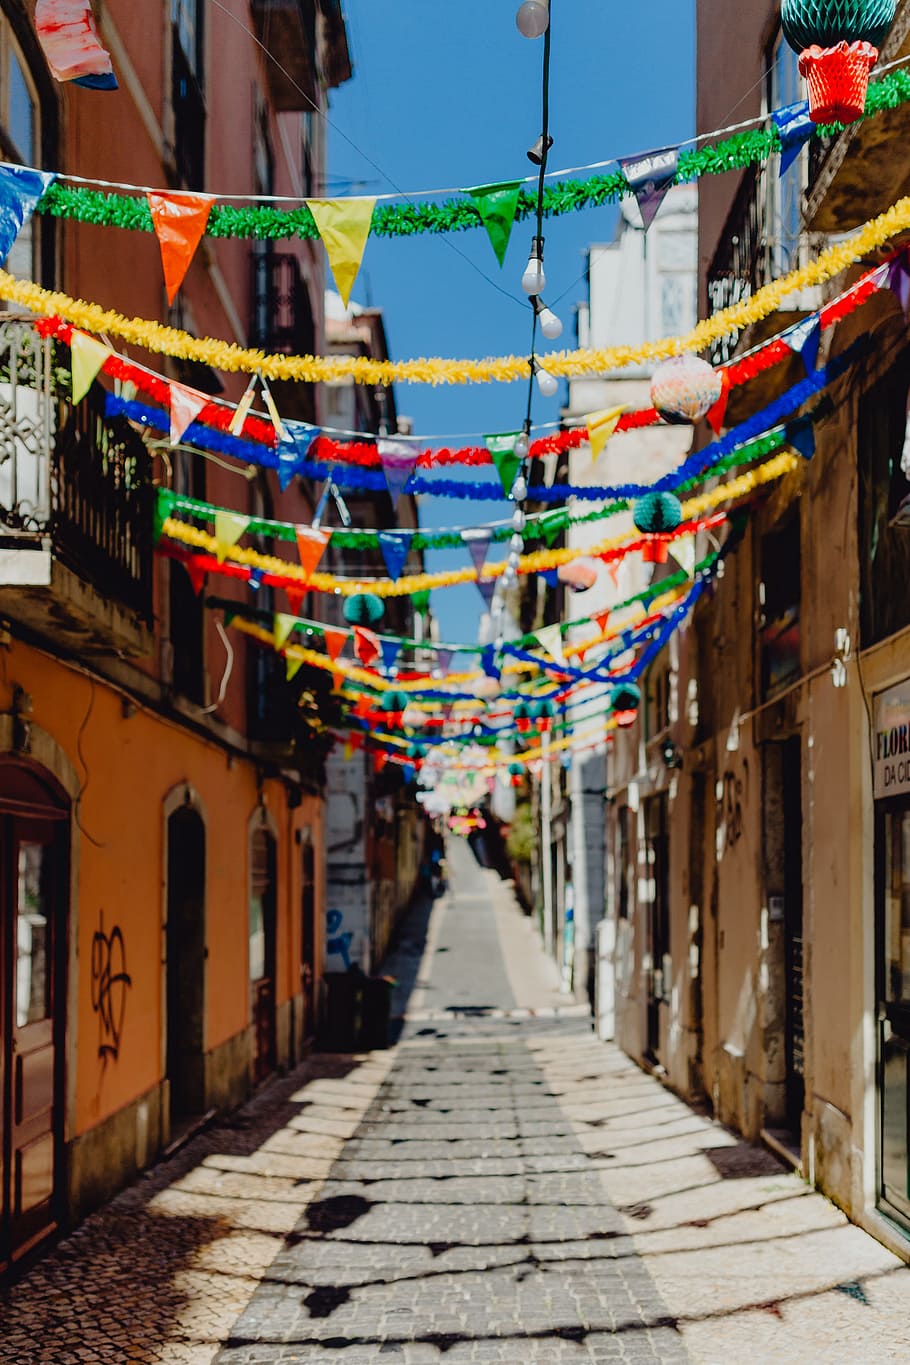 jalan-jalan, dihiasi, santo pesta pora, lisbon, portugal, bahagia, kota, Eropa, dekorasi, perjalanan